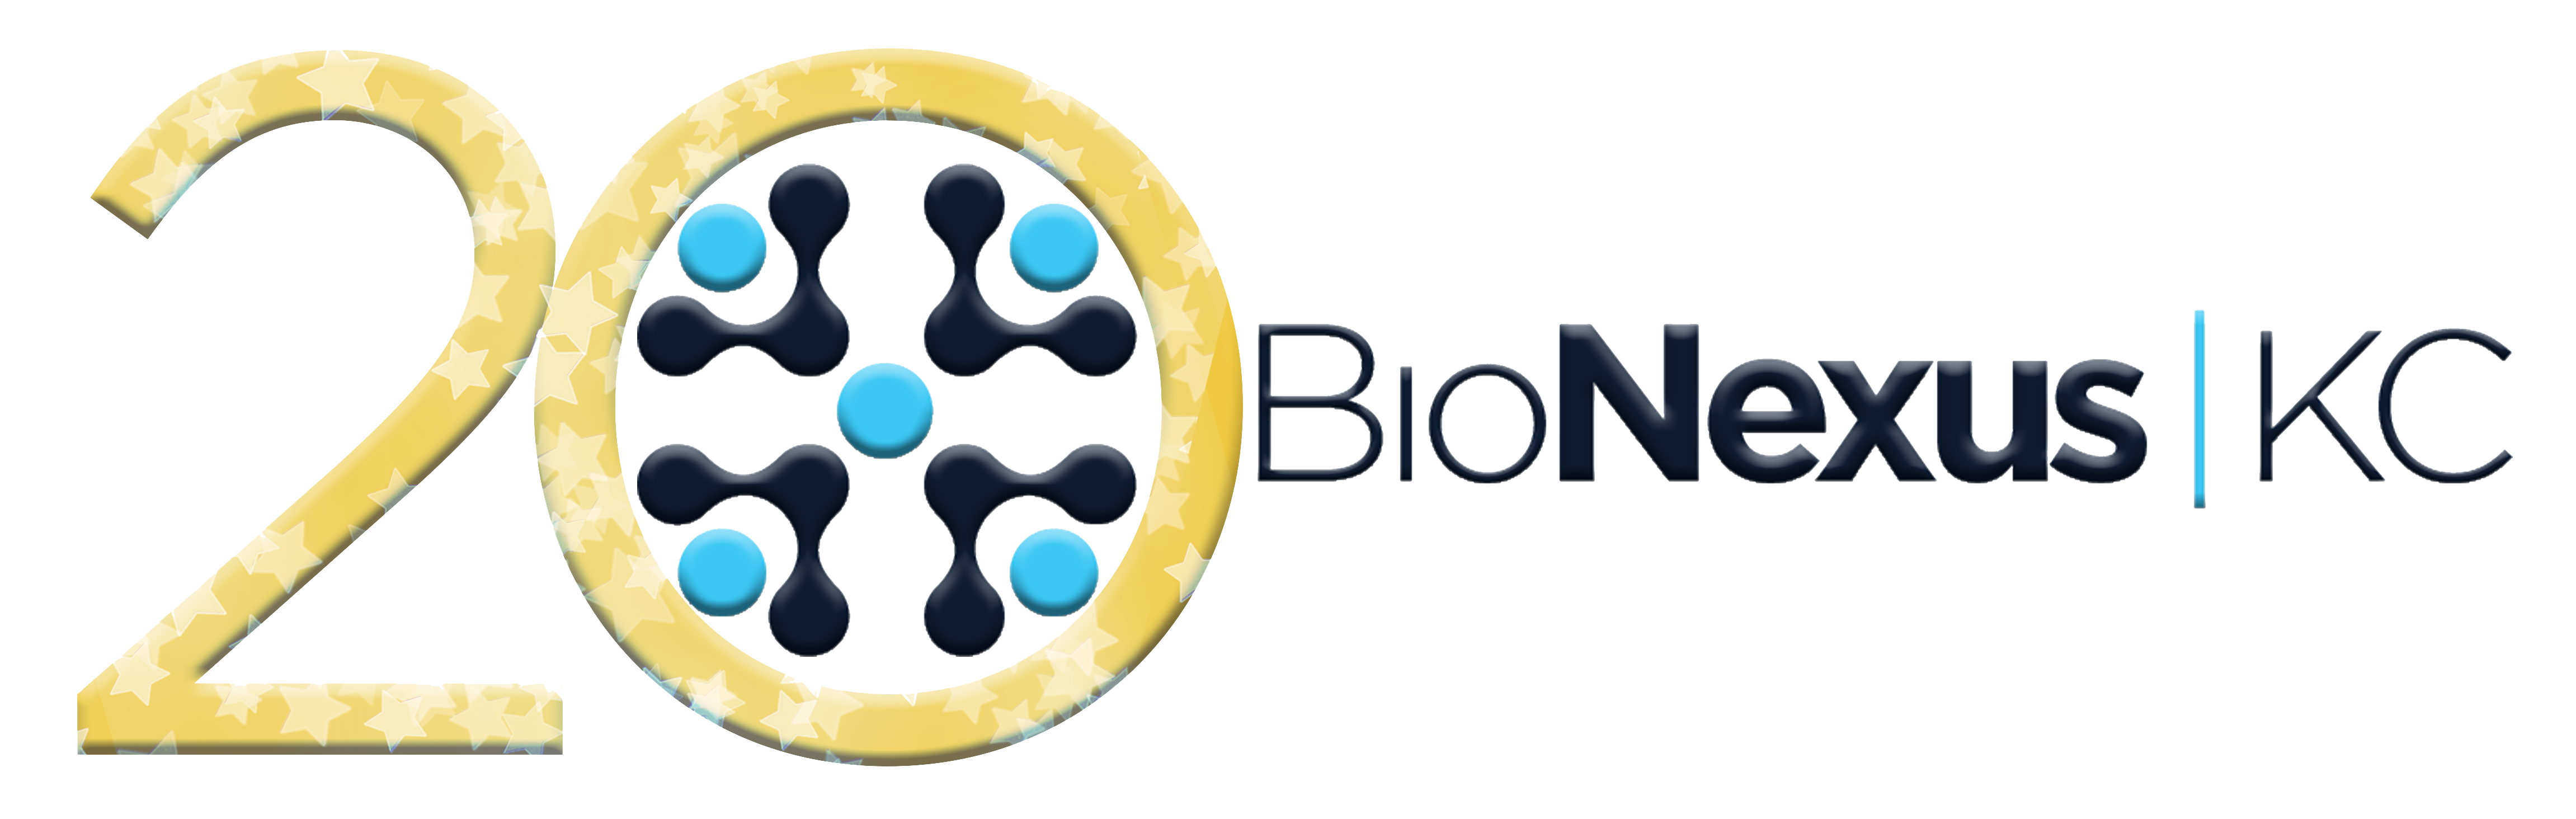 BioNexus KC Celebrates 20th Year Advancing Regional Life Sciences